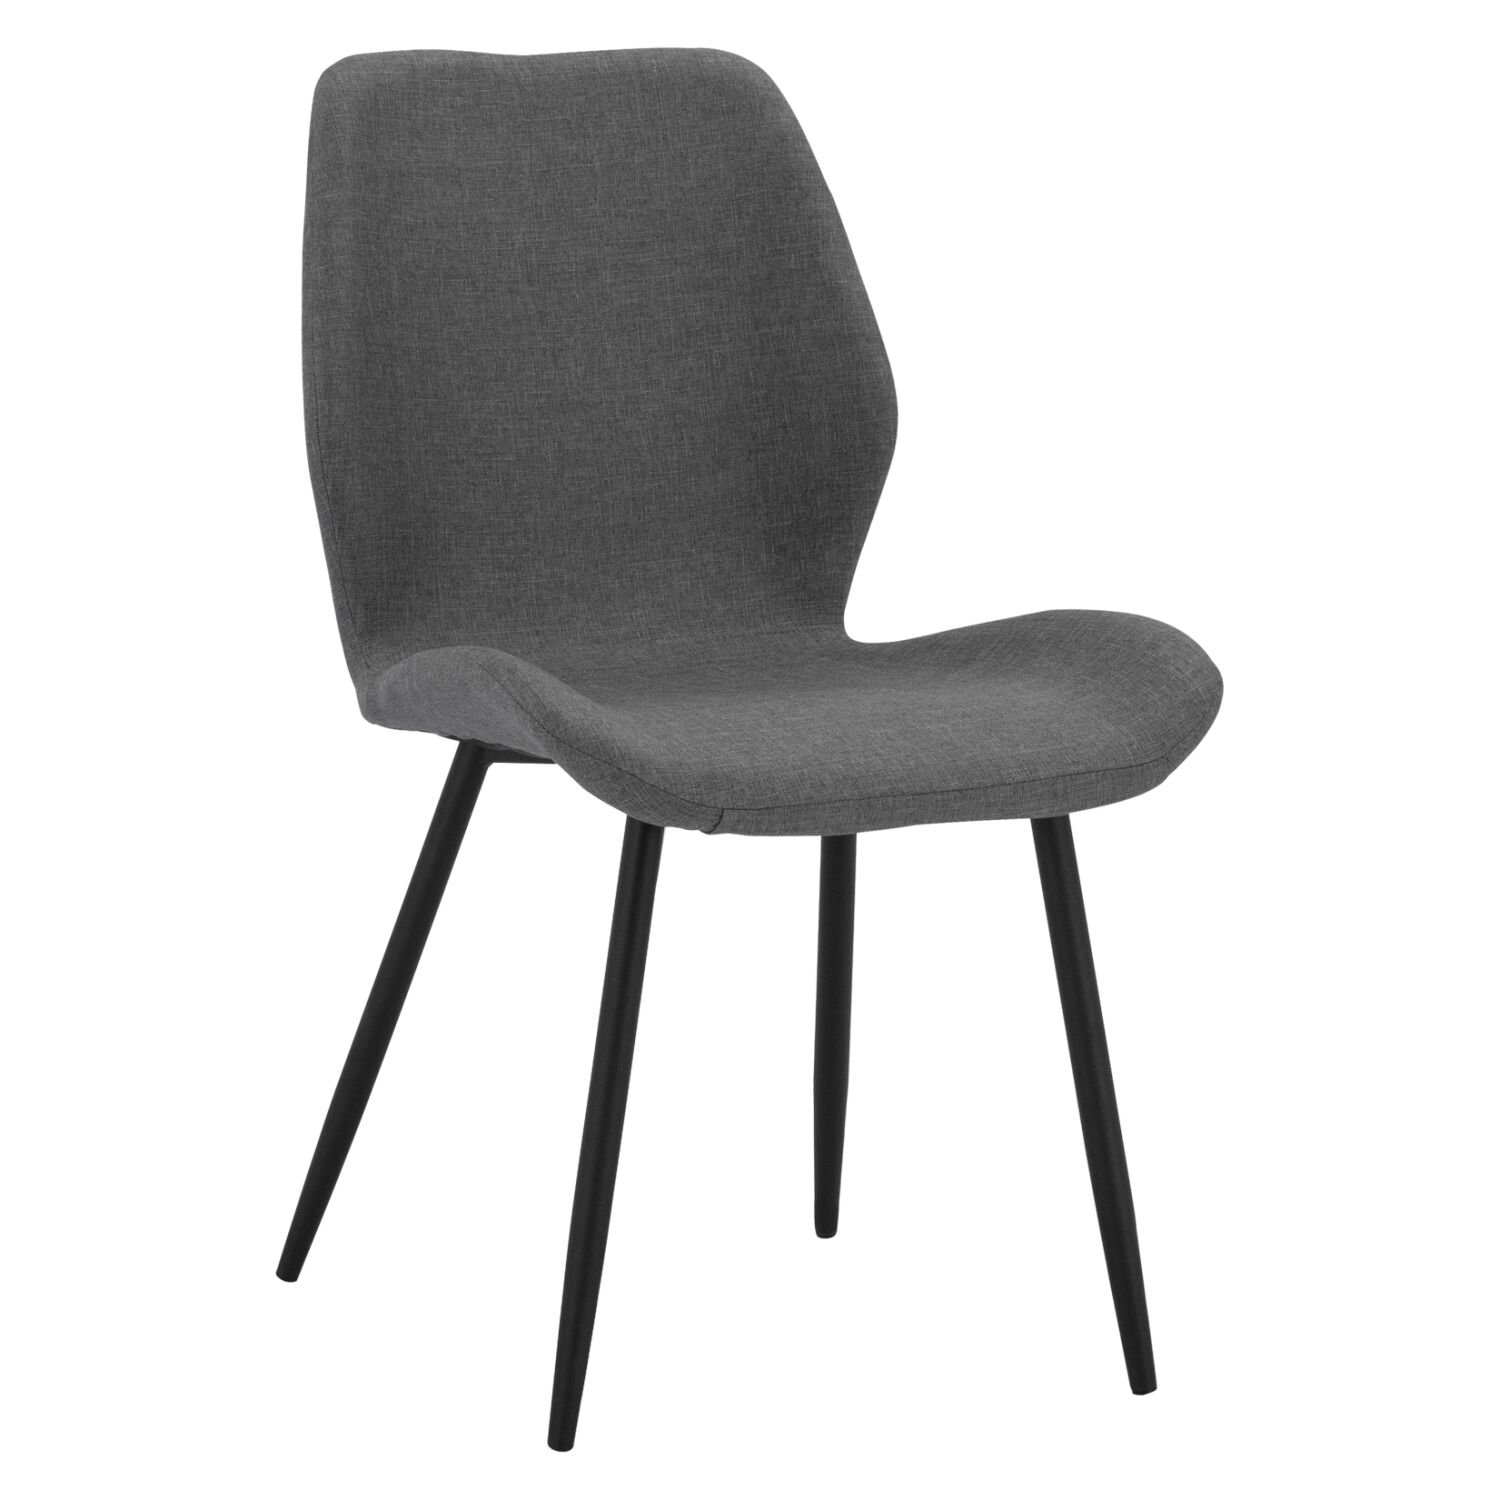 Dining Chair Klay in grey fabric & black metallic frame HM8730.01 49x62,5x87cm